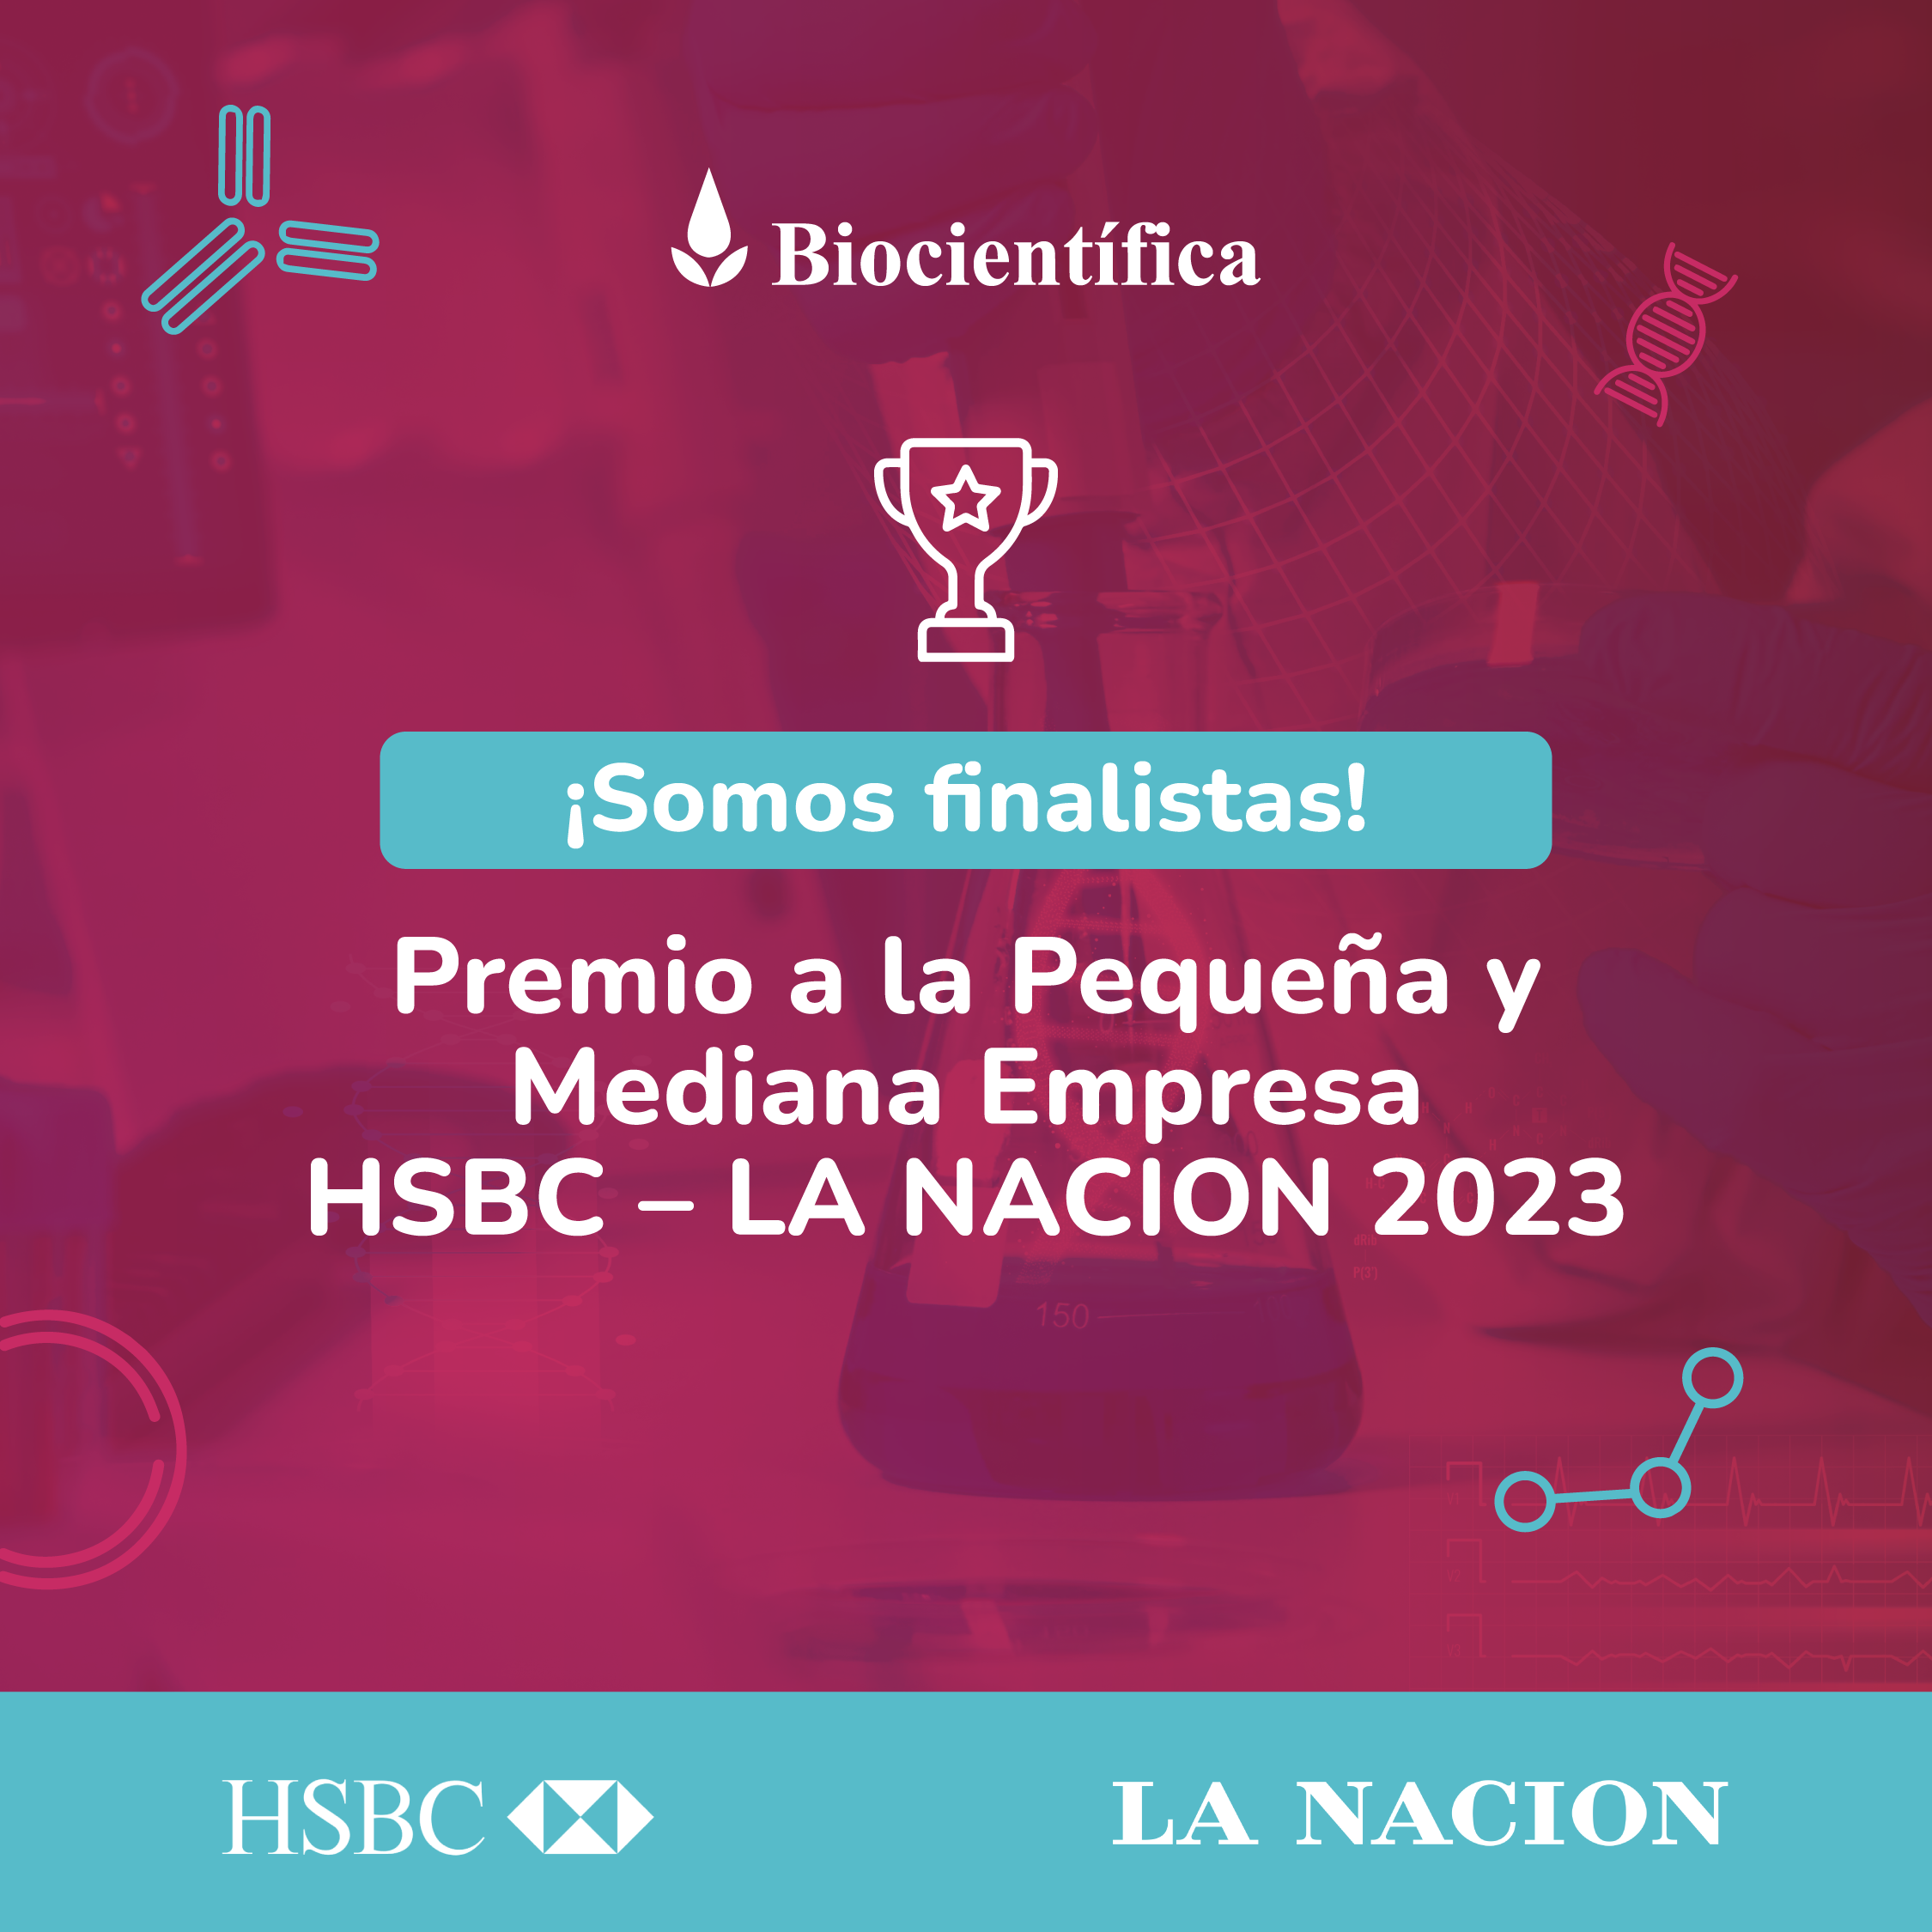 Biocientífica is nominated for the HSBC – LA NACION Small and Medium Enterprise Award 2023